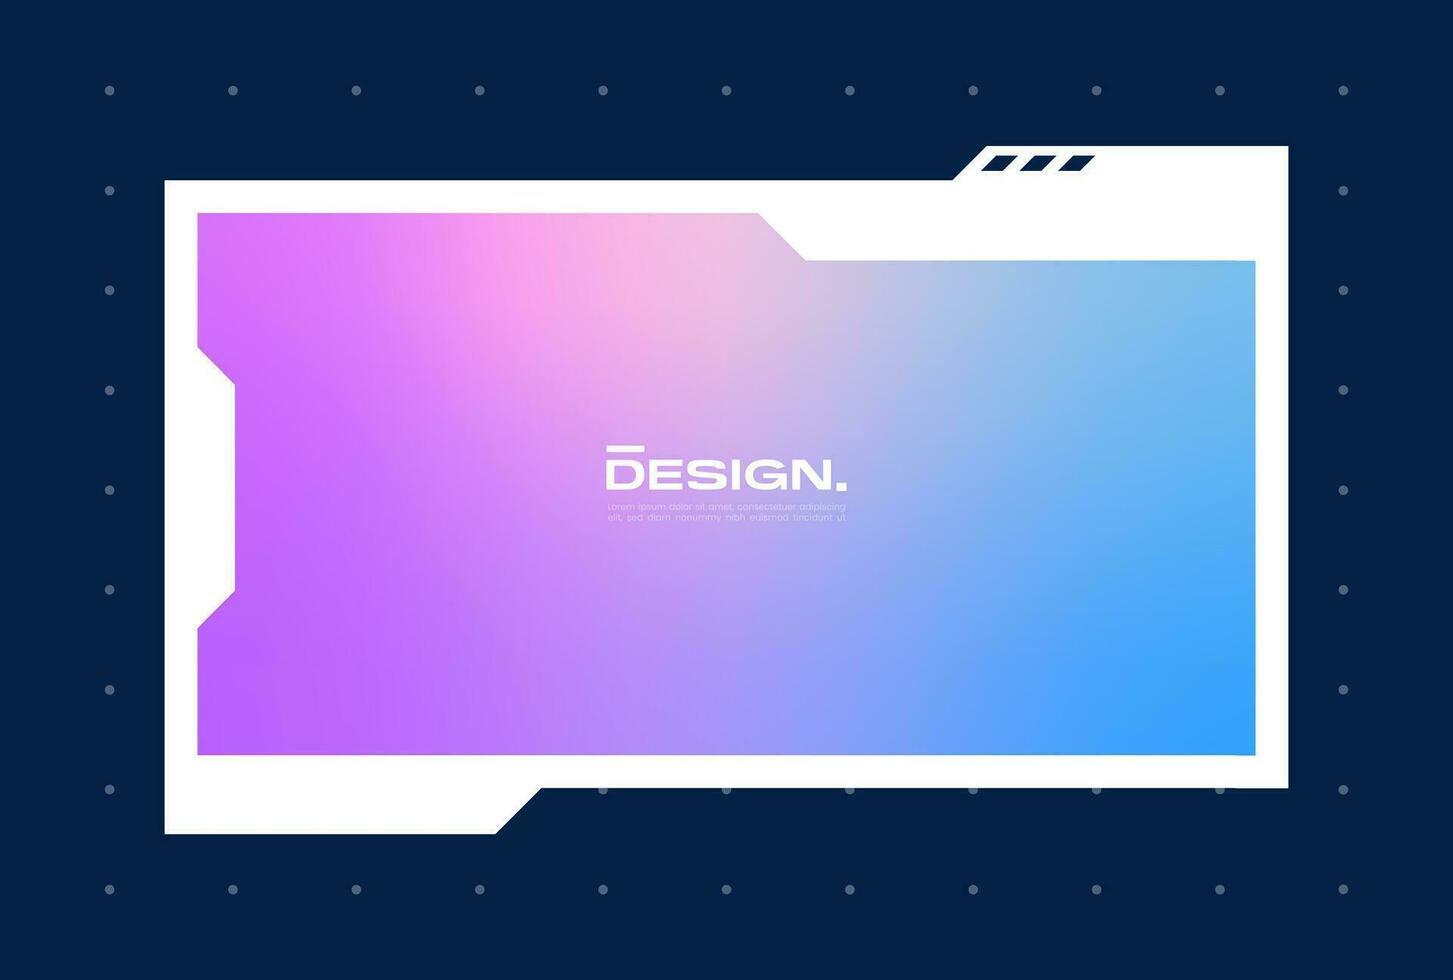 Futuristic pop up interface illustration. Video overlay element. vector